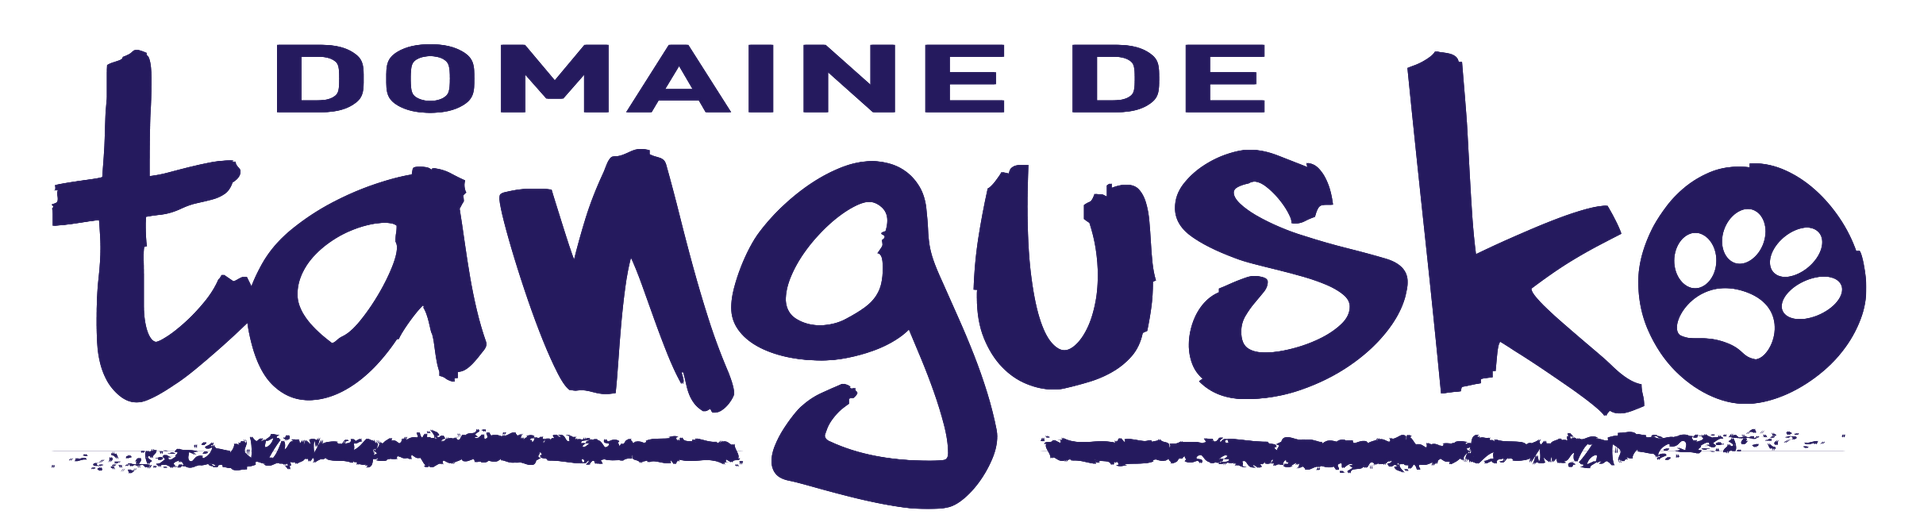 Logo Domaine de Tandusko bleu foncé